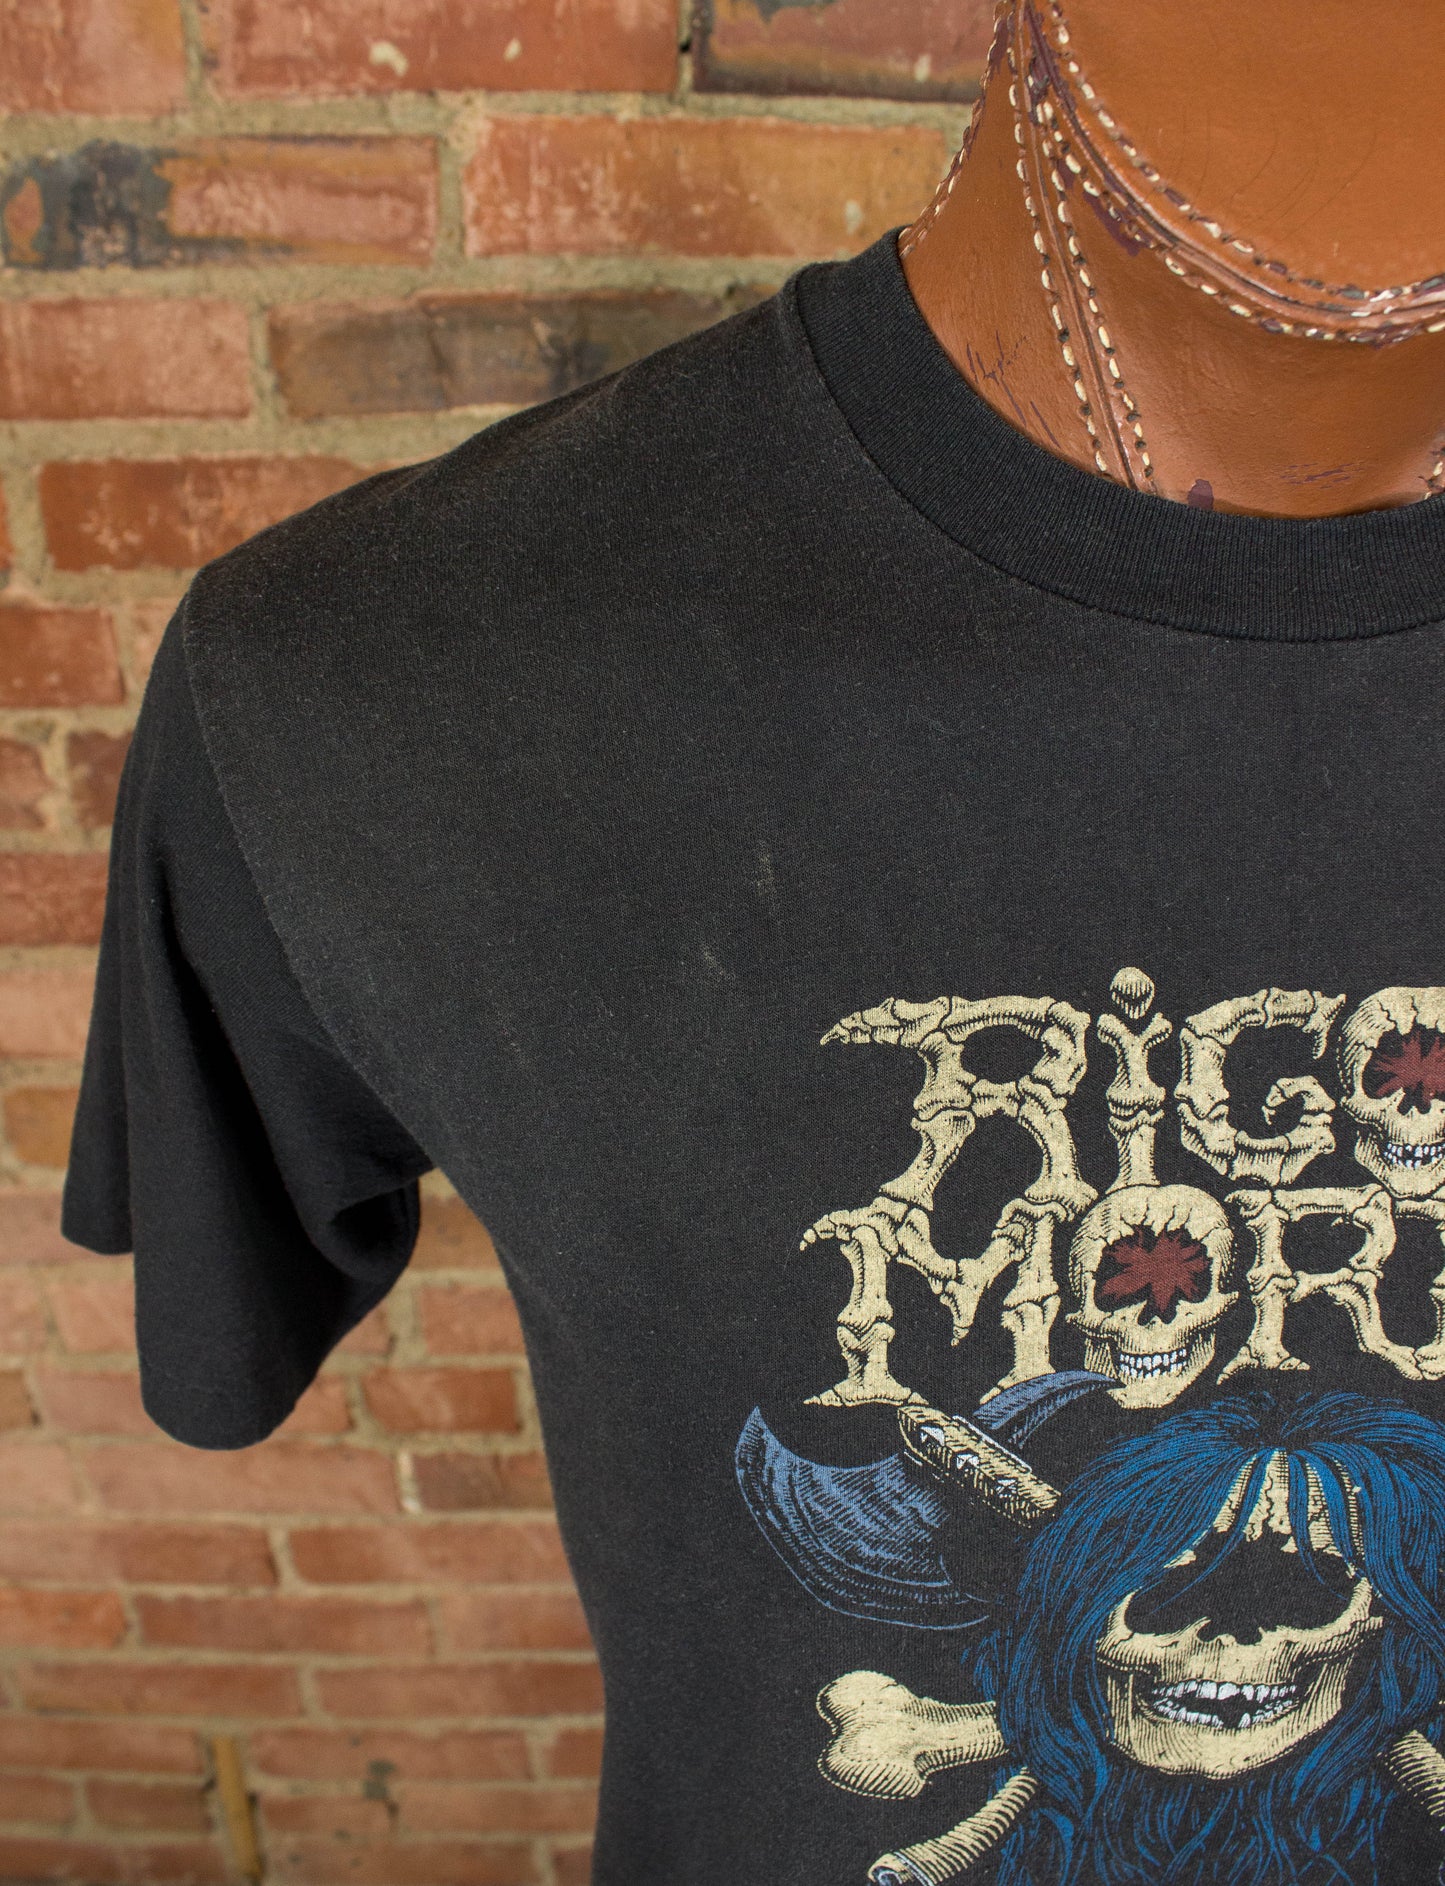 Vintage Rigor Mortis Concert T Shirt 1988 Die In Pain Faded Black Medium-Large